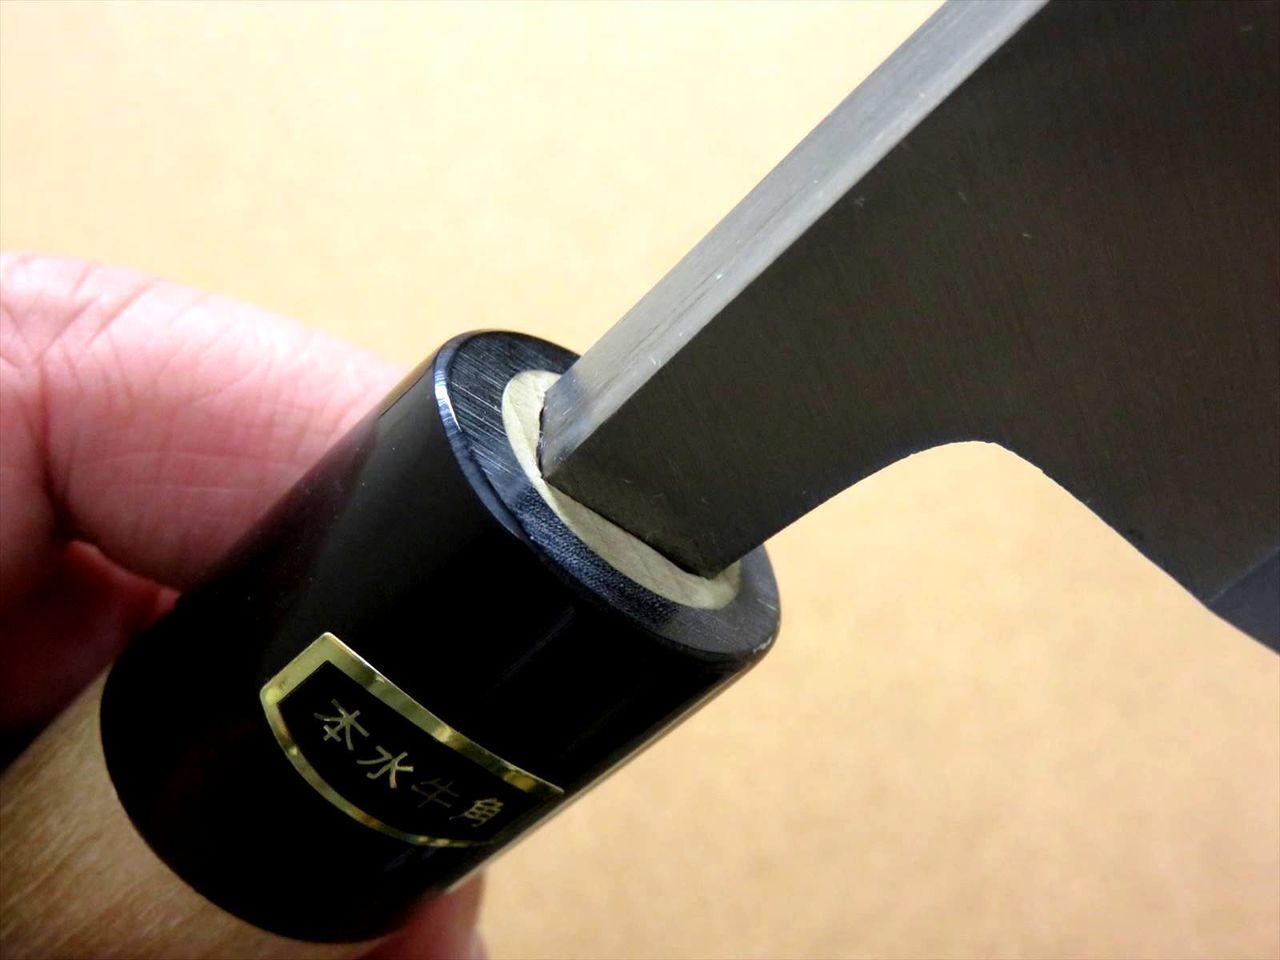 Japanese Kitchen Deba Knife 180mm 7.1 inch White Steel Shirogami #3 SEKI JAPAN